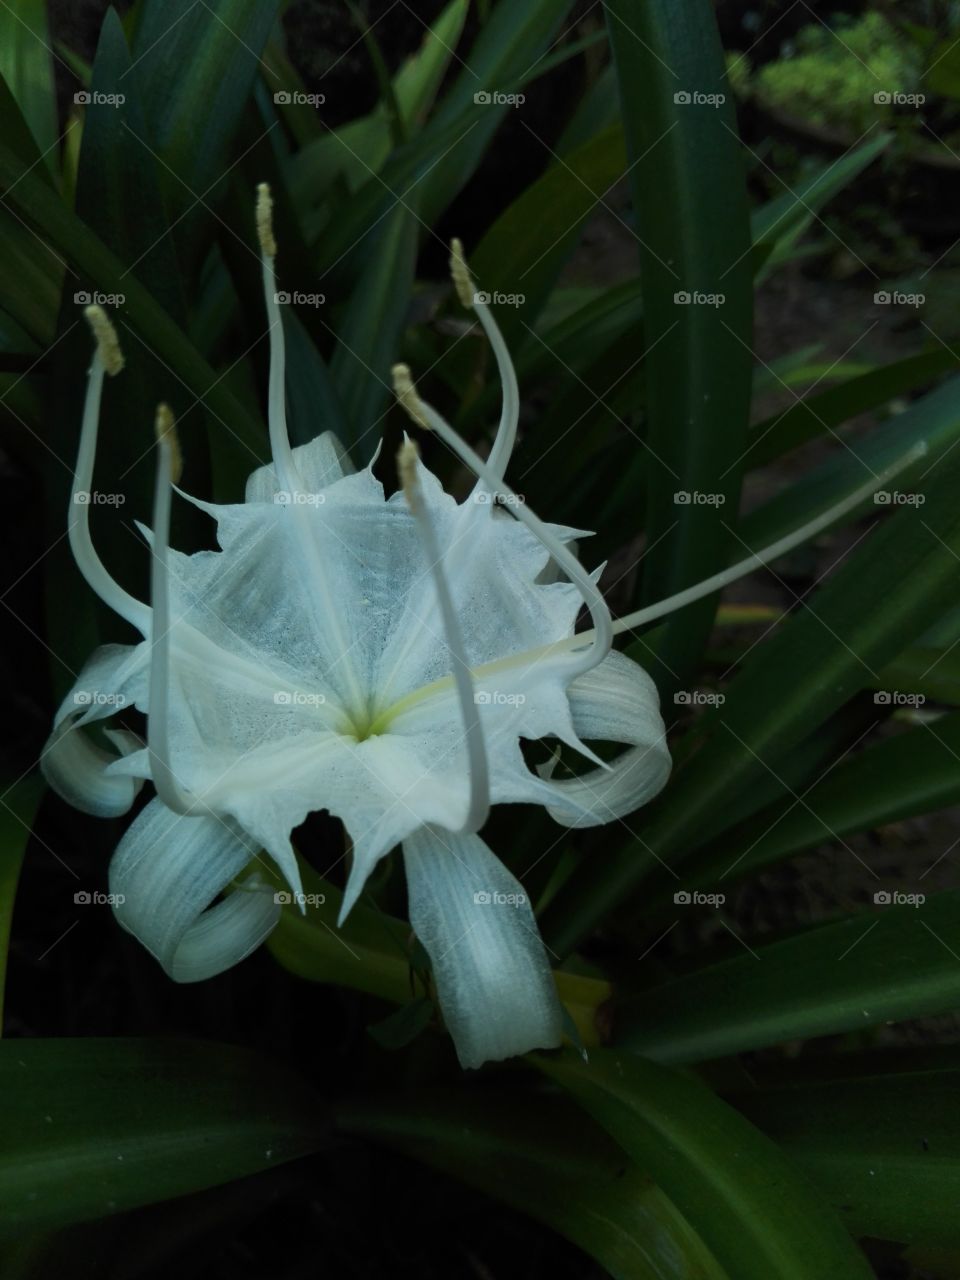 A rare beautiful white flower.